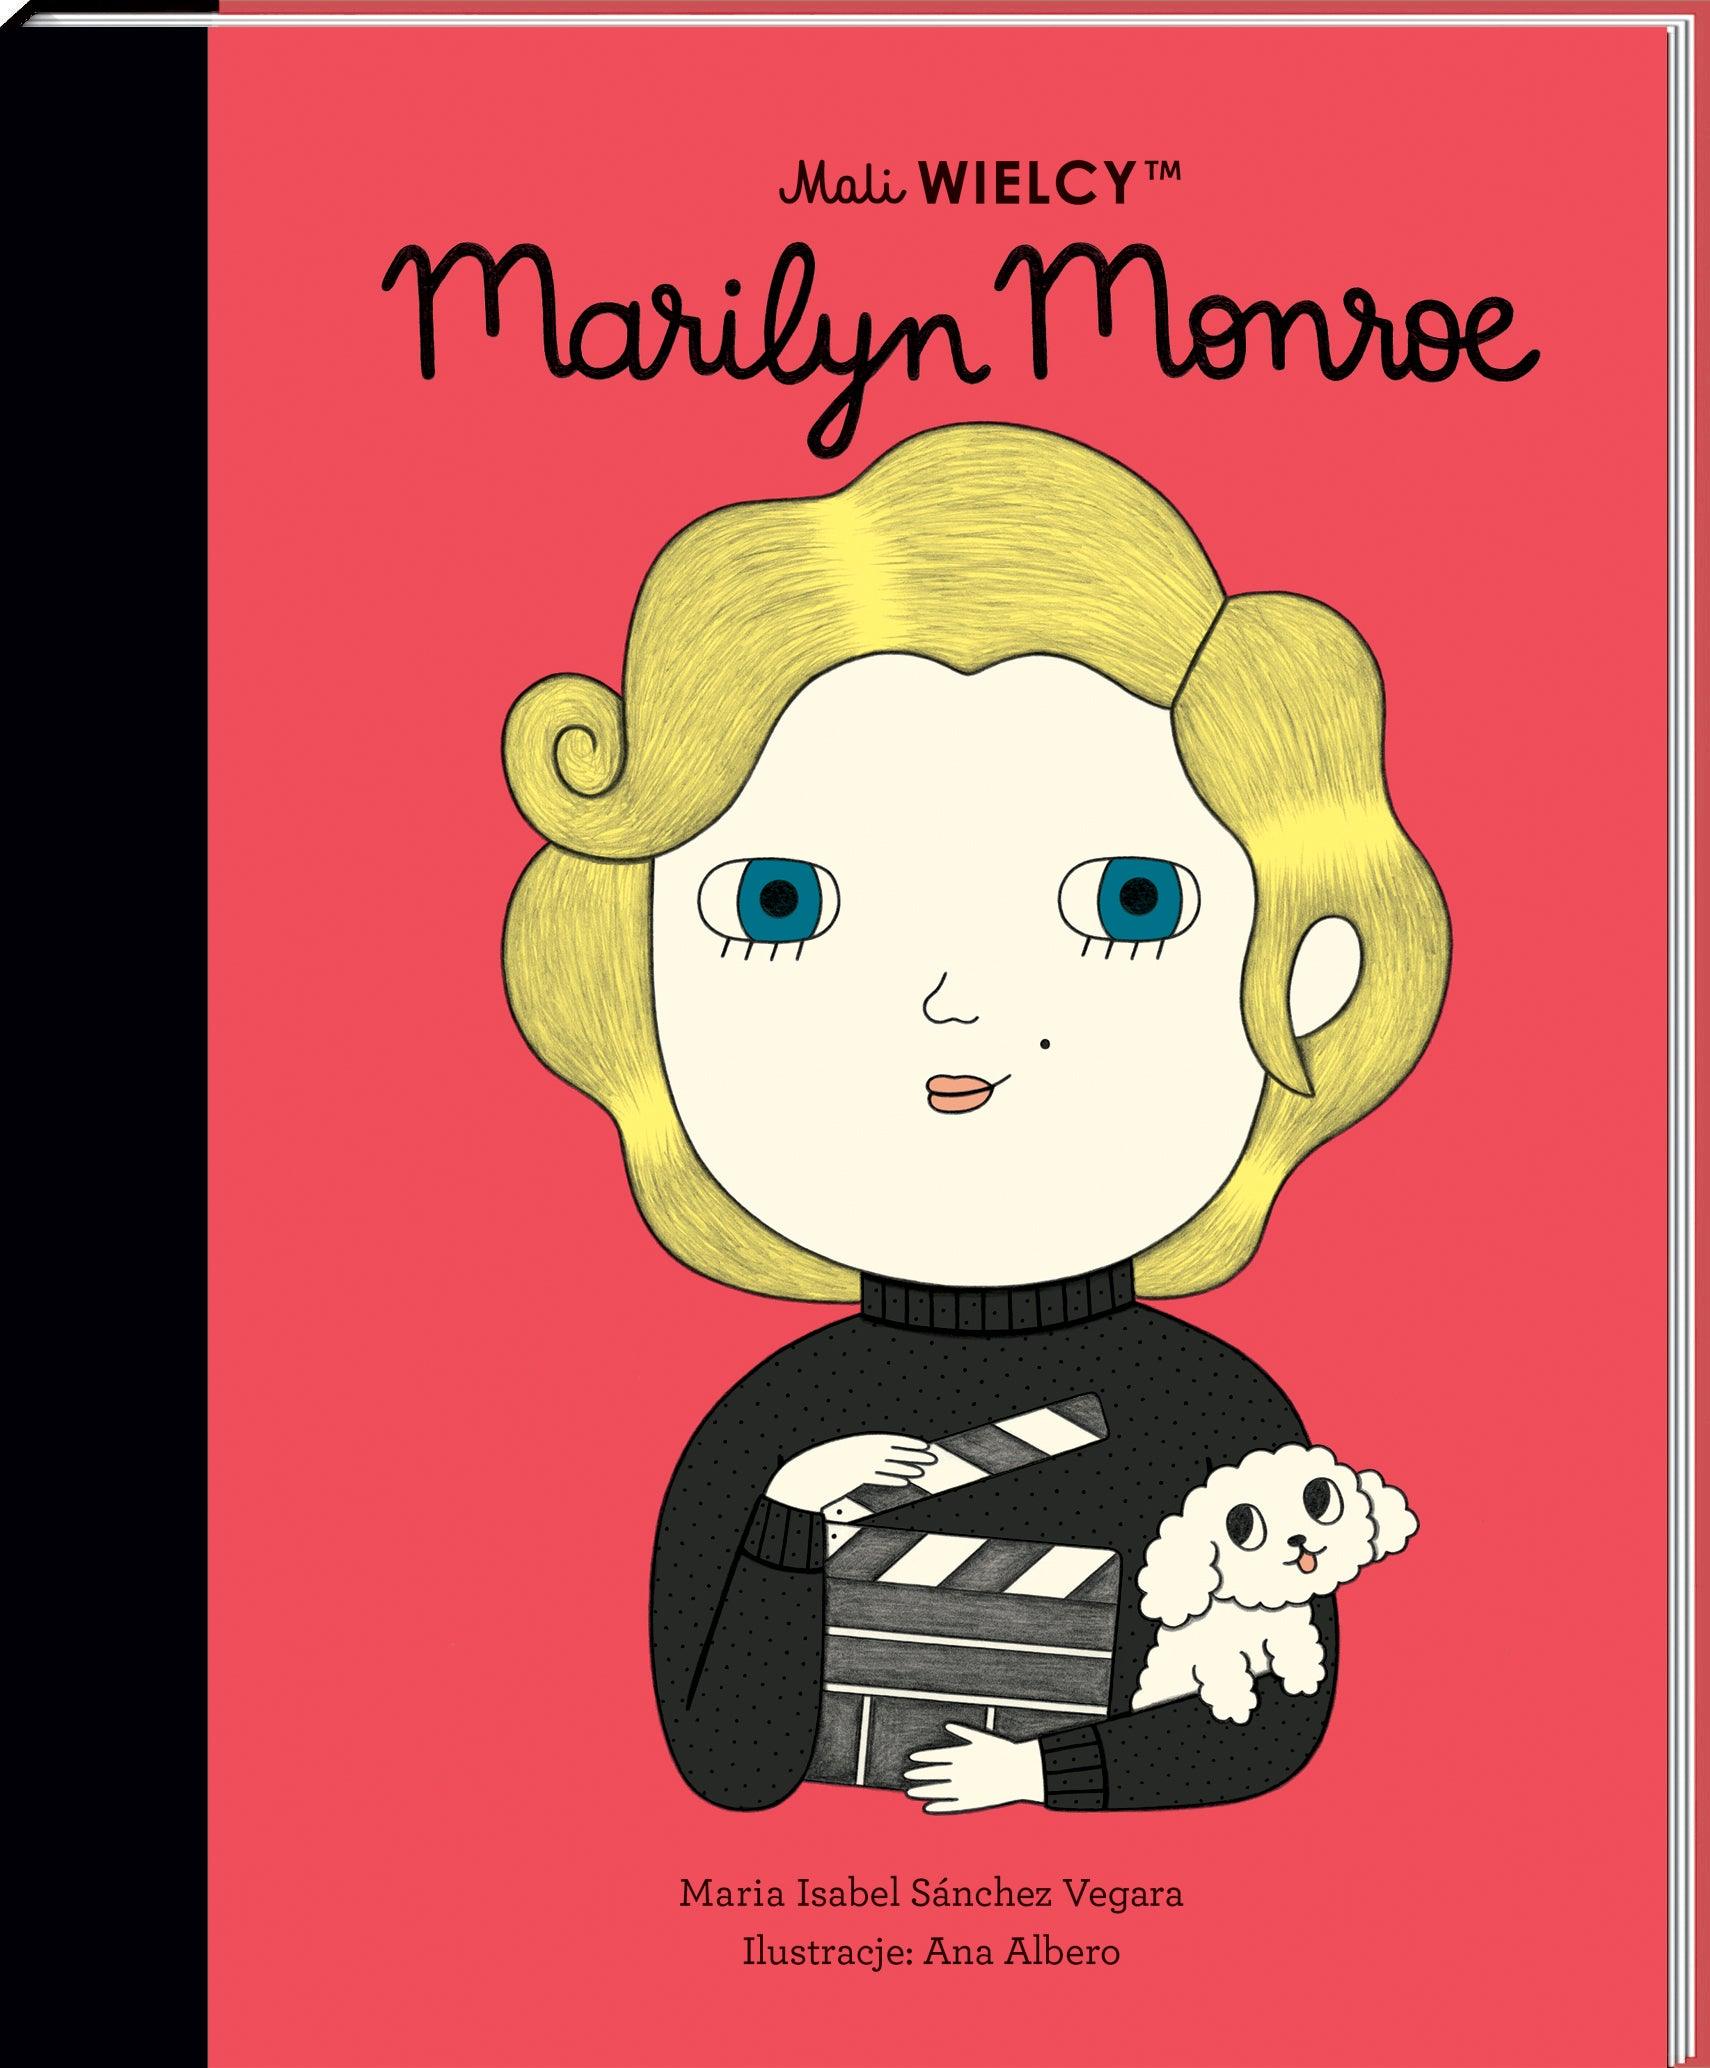 Smart Books: Mali WIELCY. Marilyn Monroe - Noski Noski